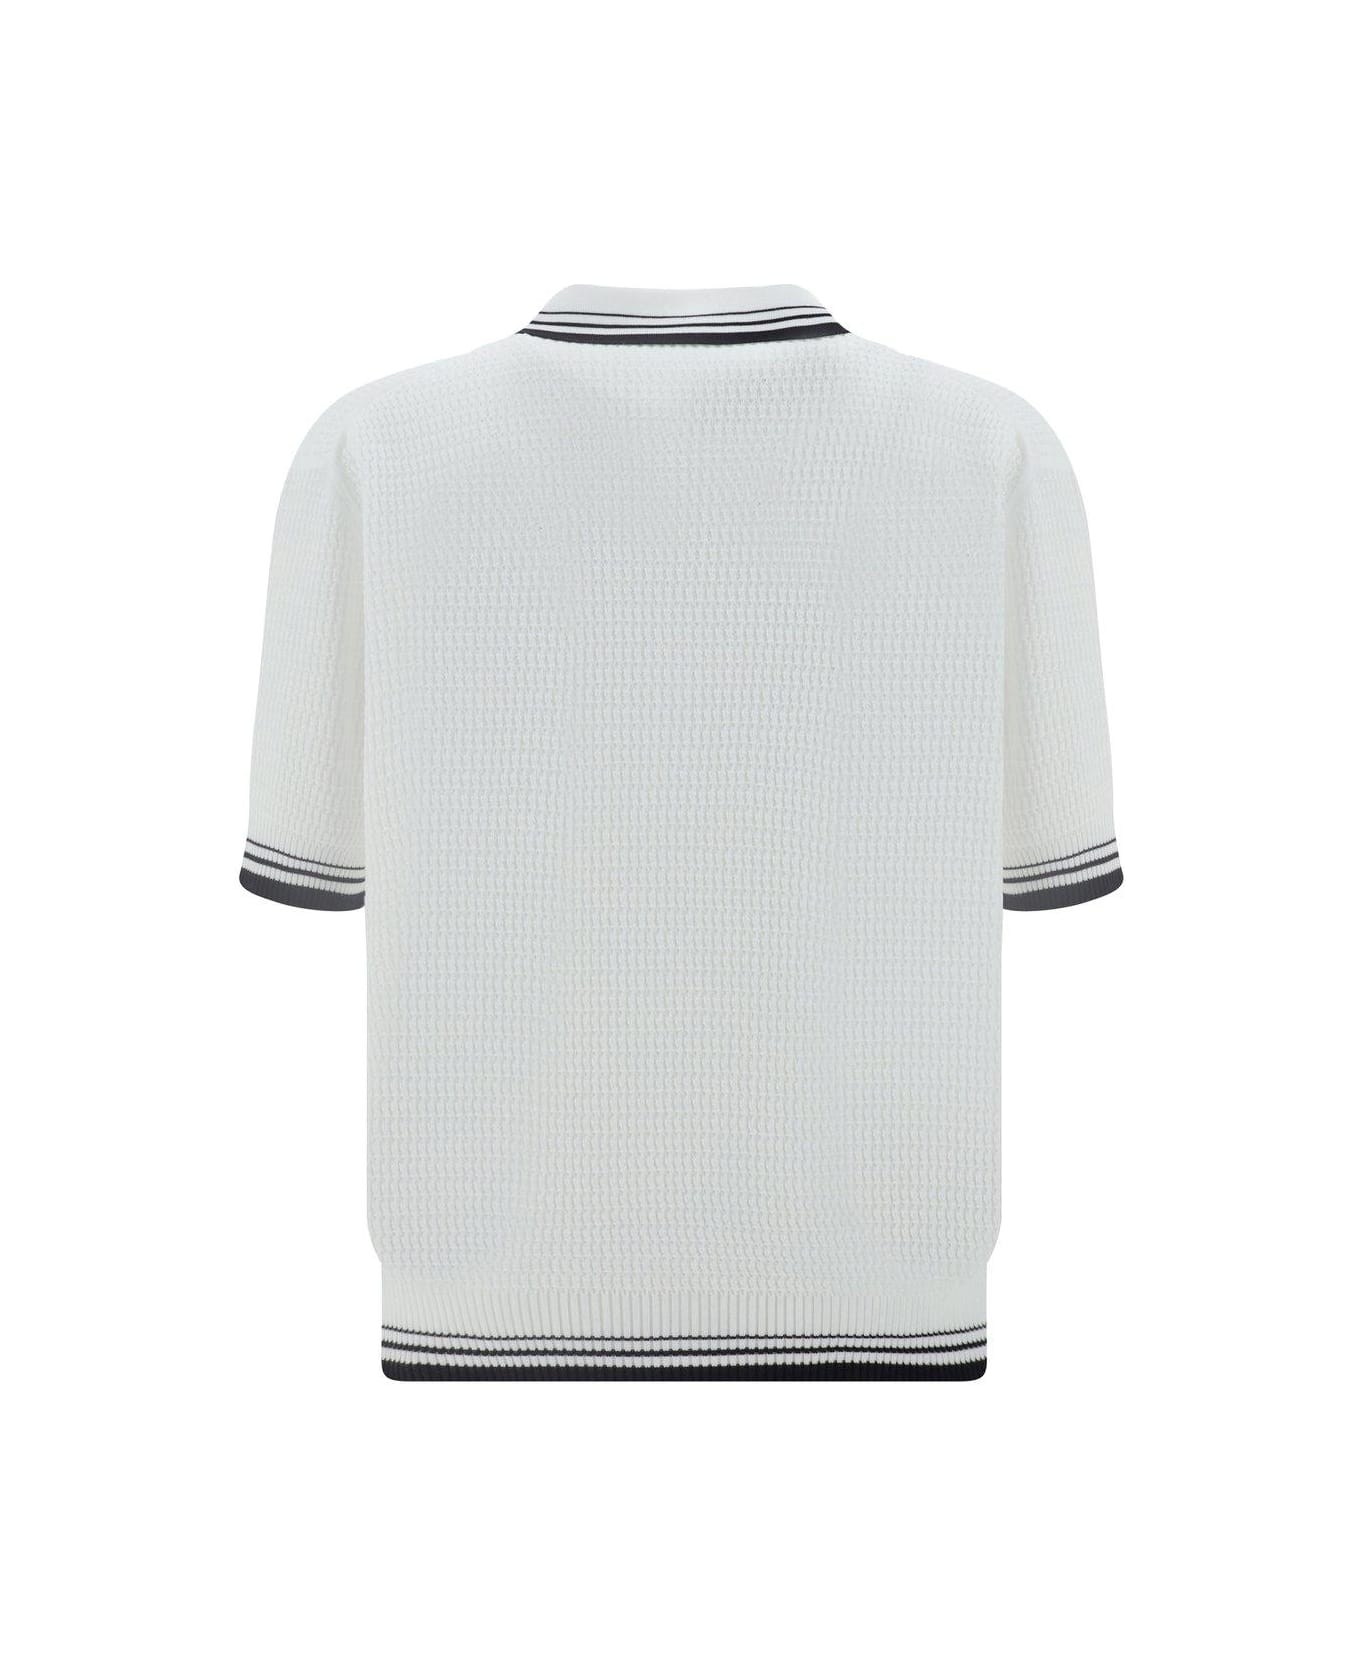 Prada Logo Embroidered Knit Polo Shirt - Bianco+nero